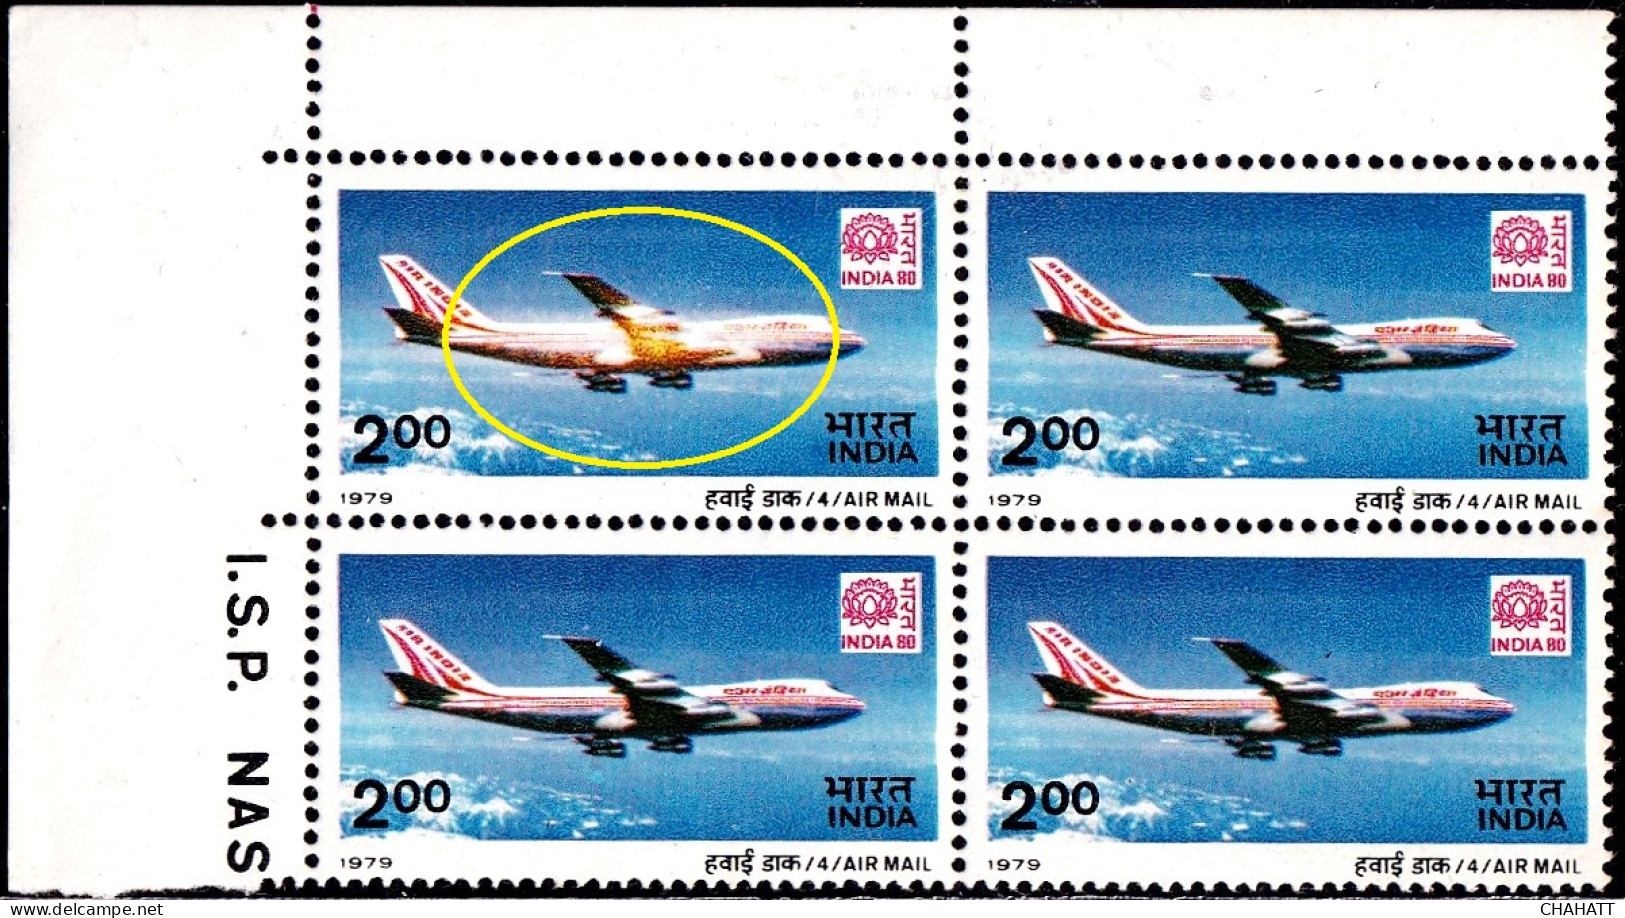 INDIA-1979- AIRMAIL-AIR INDIA FLIGHT-200p- ERROR-COLOR VARIETY - CORNER BLOCK OF 4- H2-25 - Plaatfouten En Curiosa